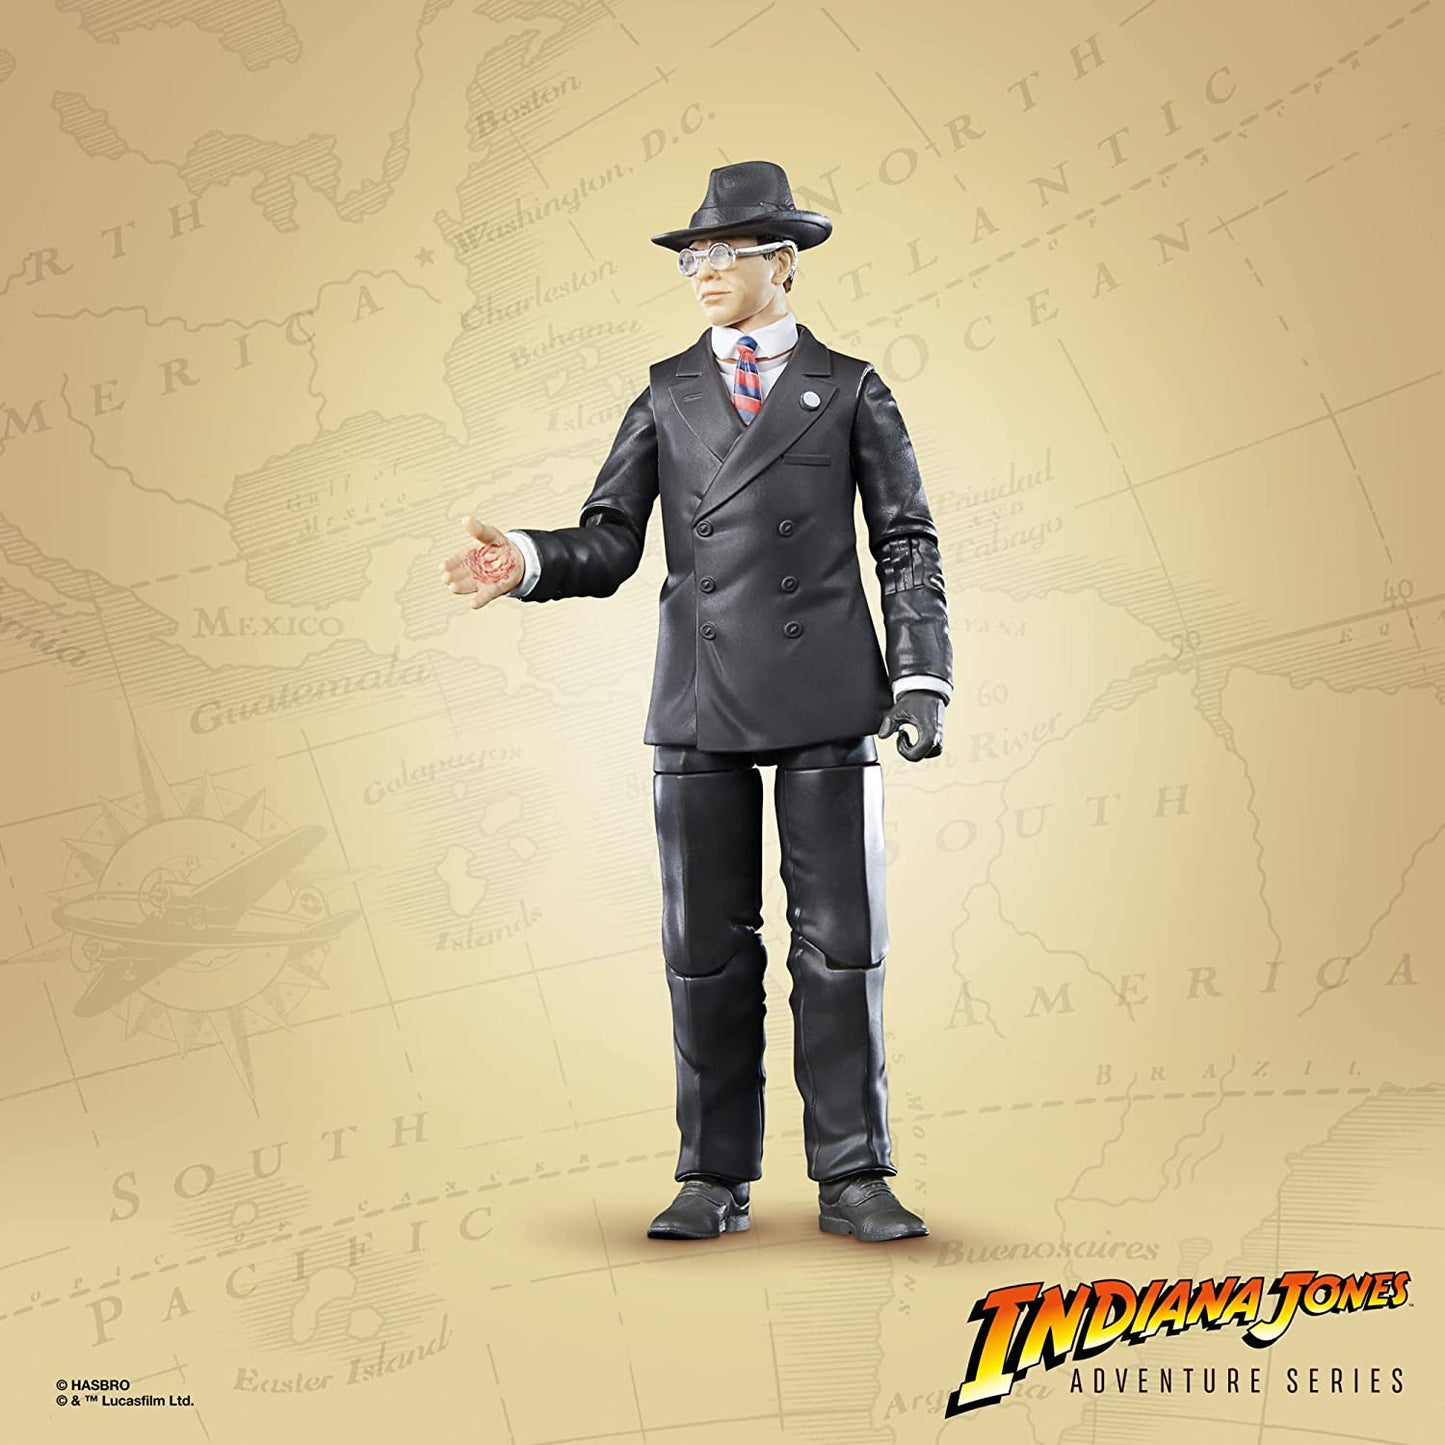 Indiana Jones Adventure Series Raiders of the Lost Ark Arnold Toht 6-inch Action Figure